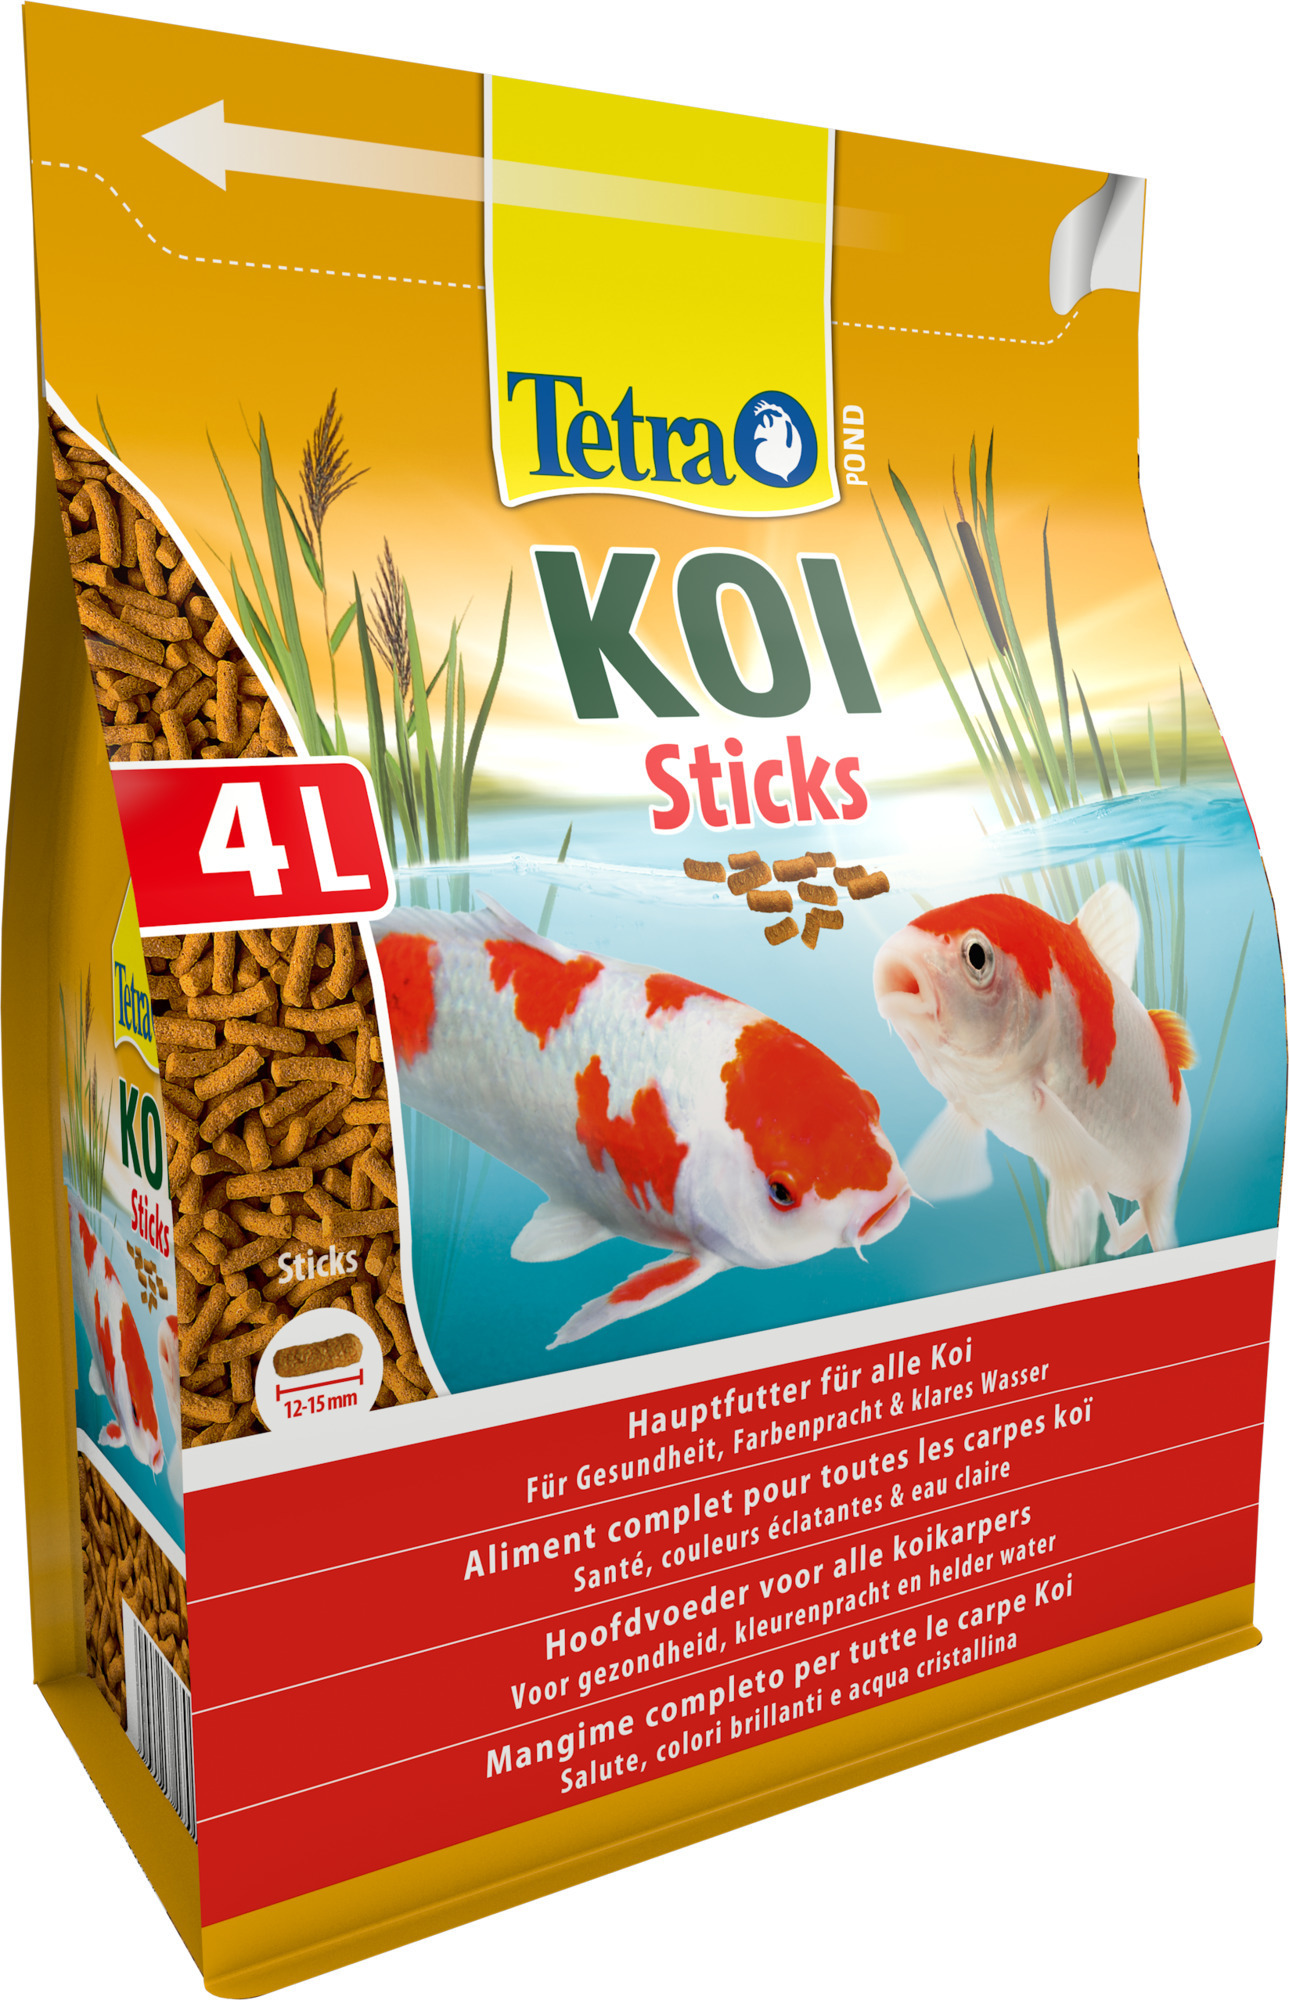 Pond Koi Sticks 4 Liter